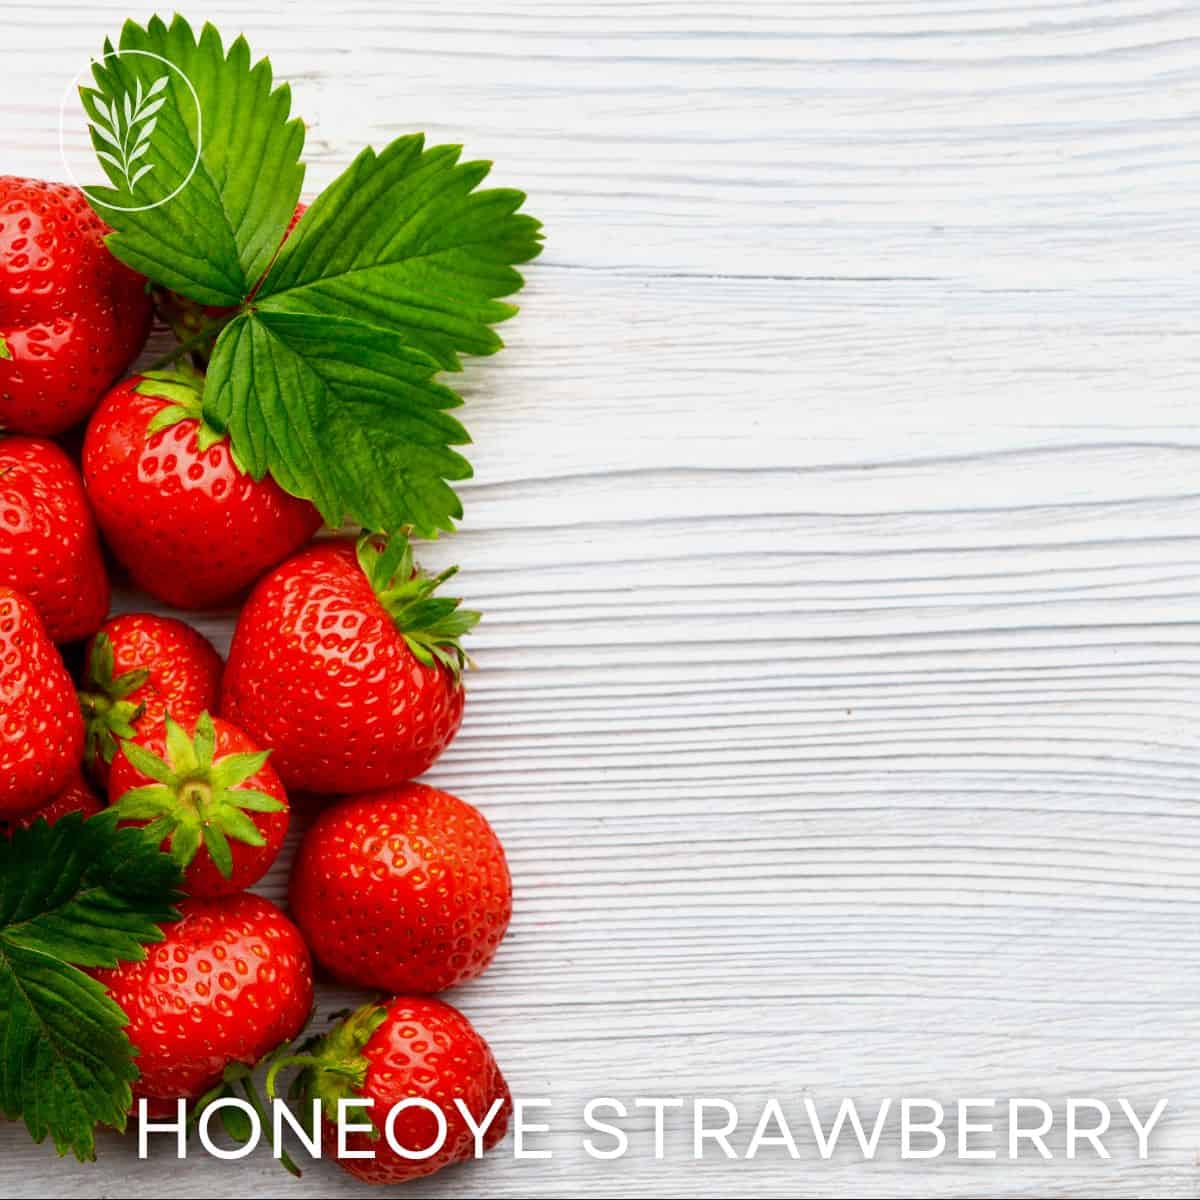 Honeoye strawberry via @home4theharvest